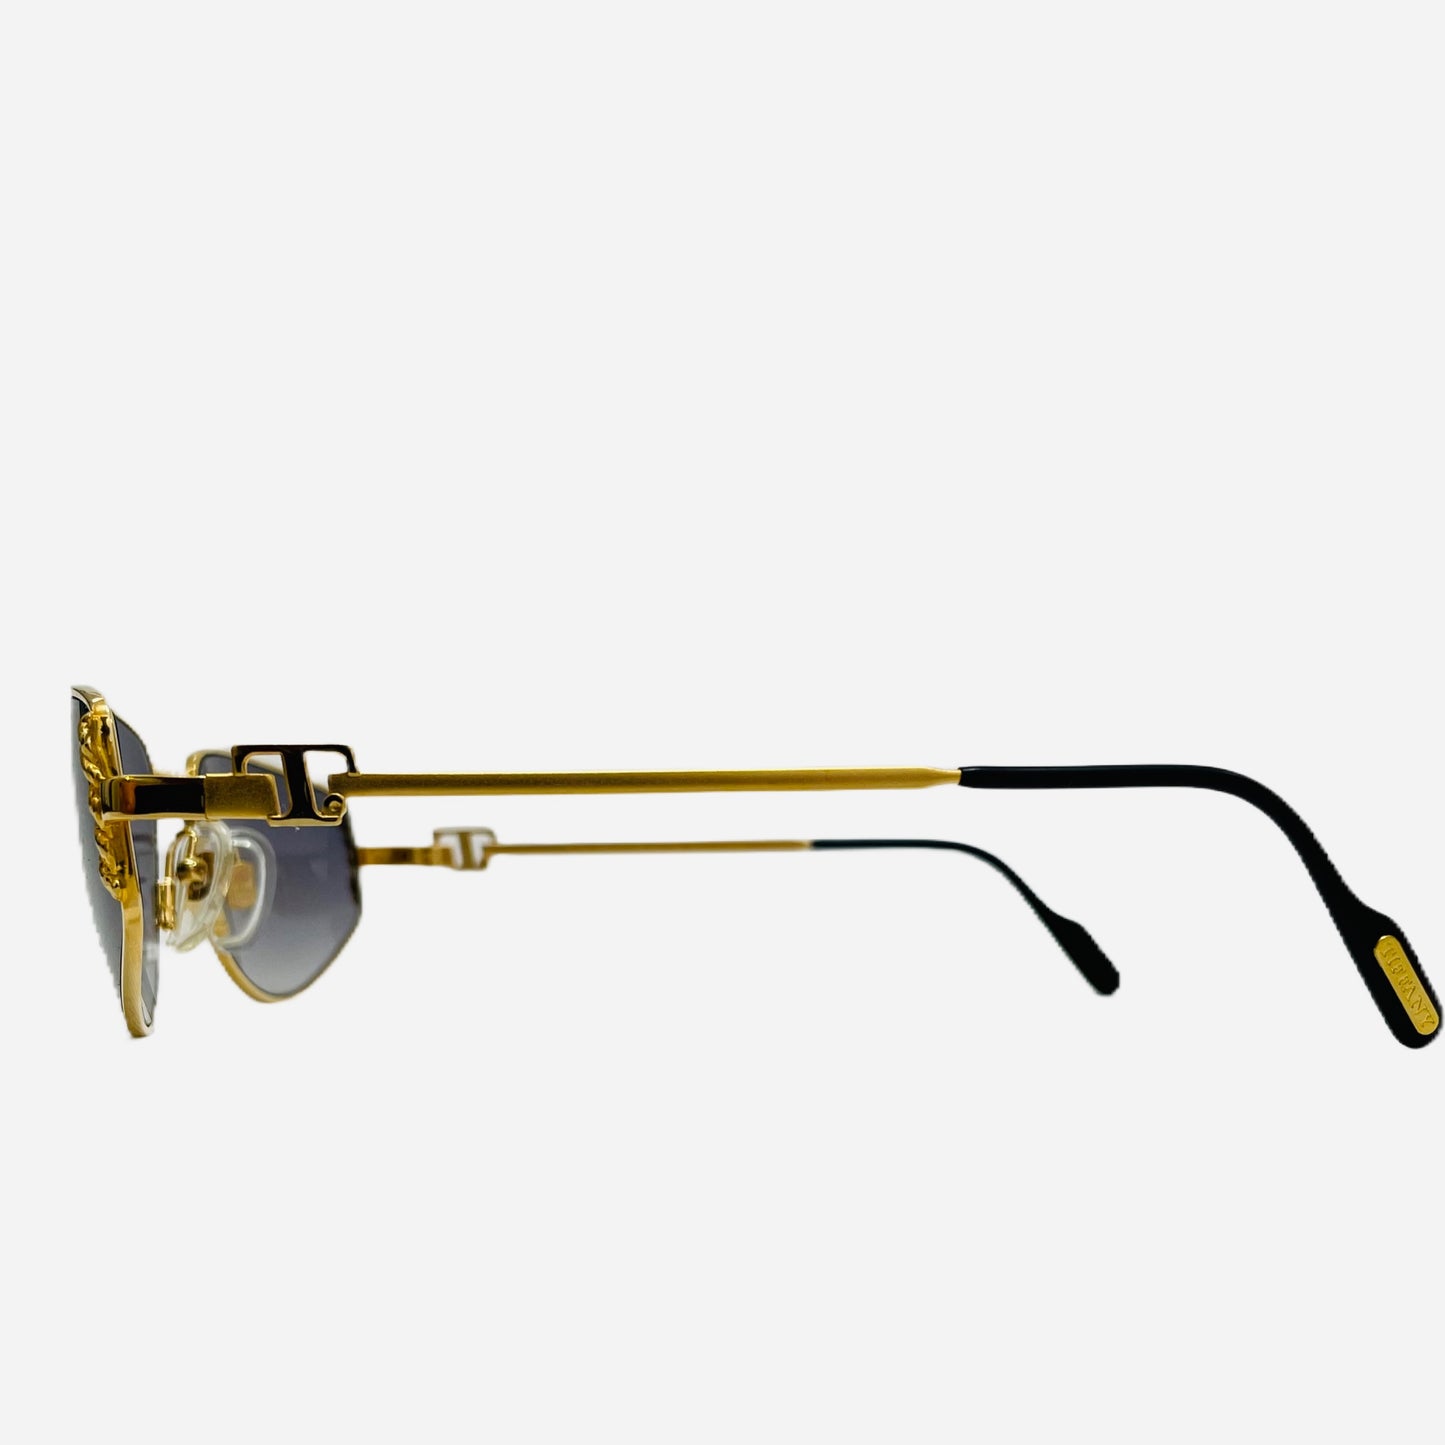 Tiffany-Lunettes-Sonnenbrille-Sunglasses-the-seekers-vintage-designer-sunglasses-23-Carats-Gold-side